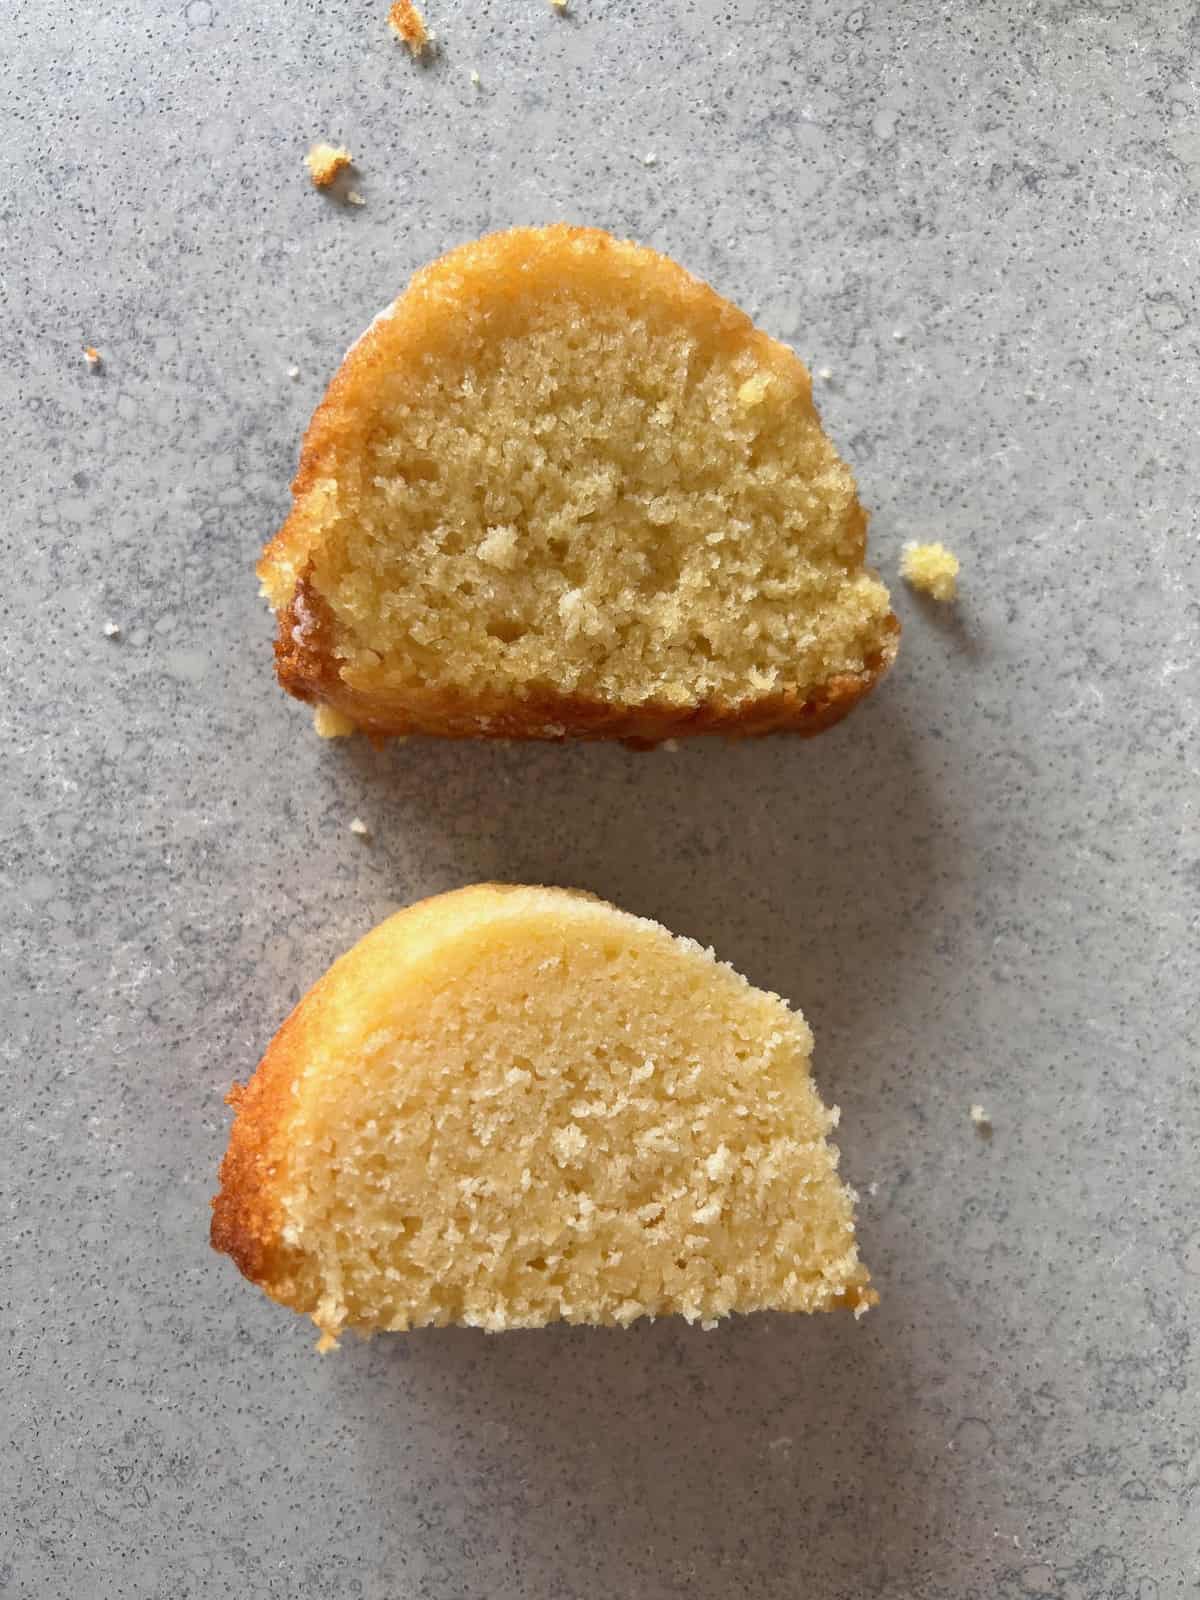 Two slices of lemon bundt cake taken during the recipe testing process. 